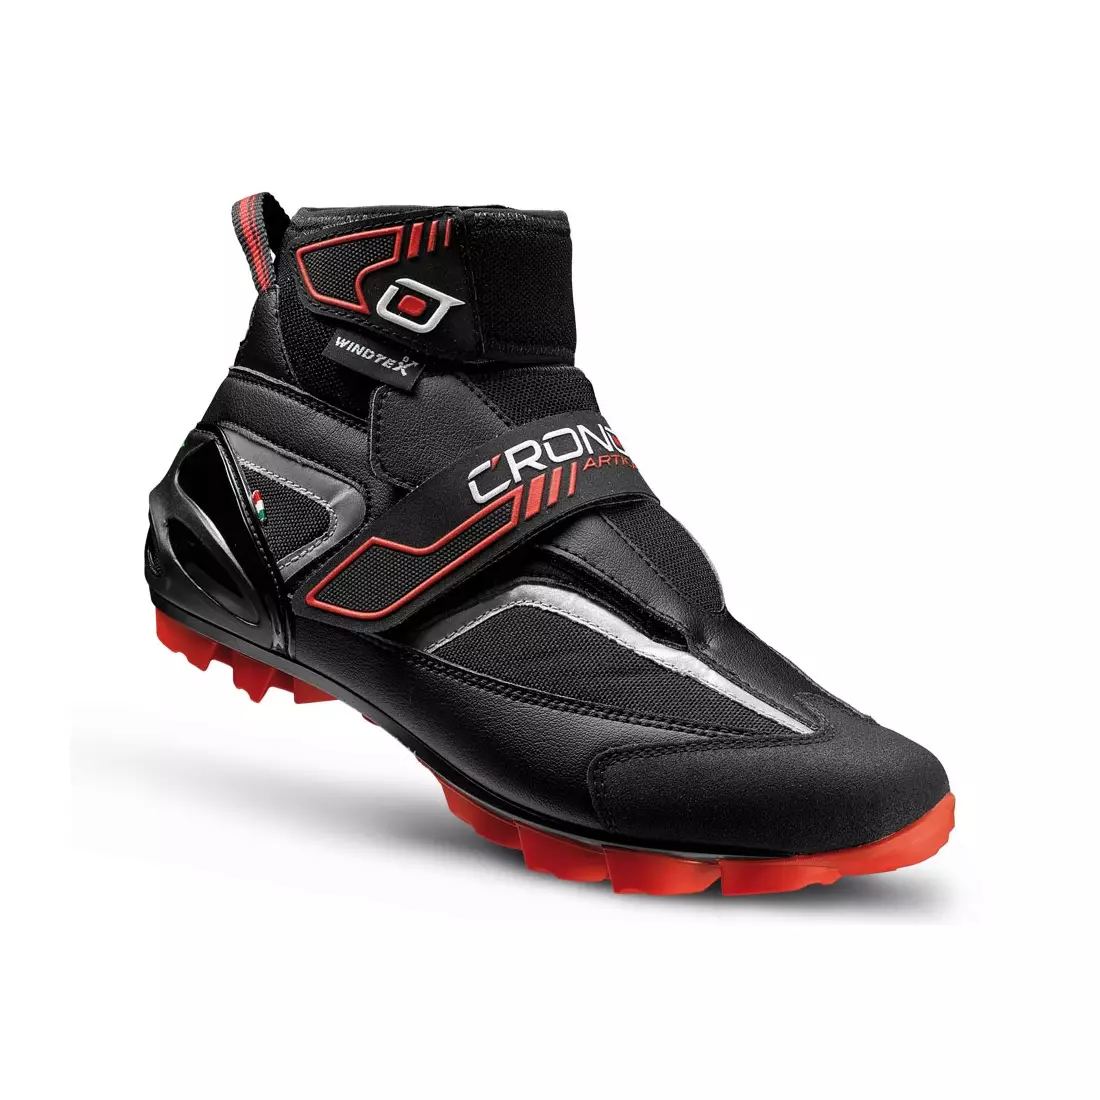 CRONO ARTICA MTB - winter MTB cycling shoes - color: Black